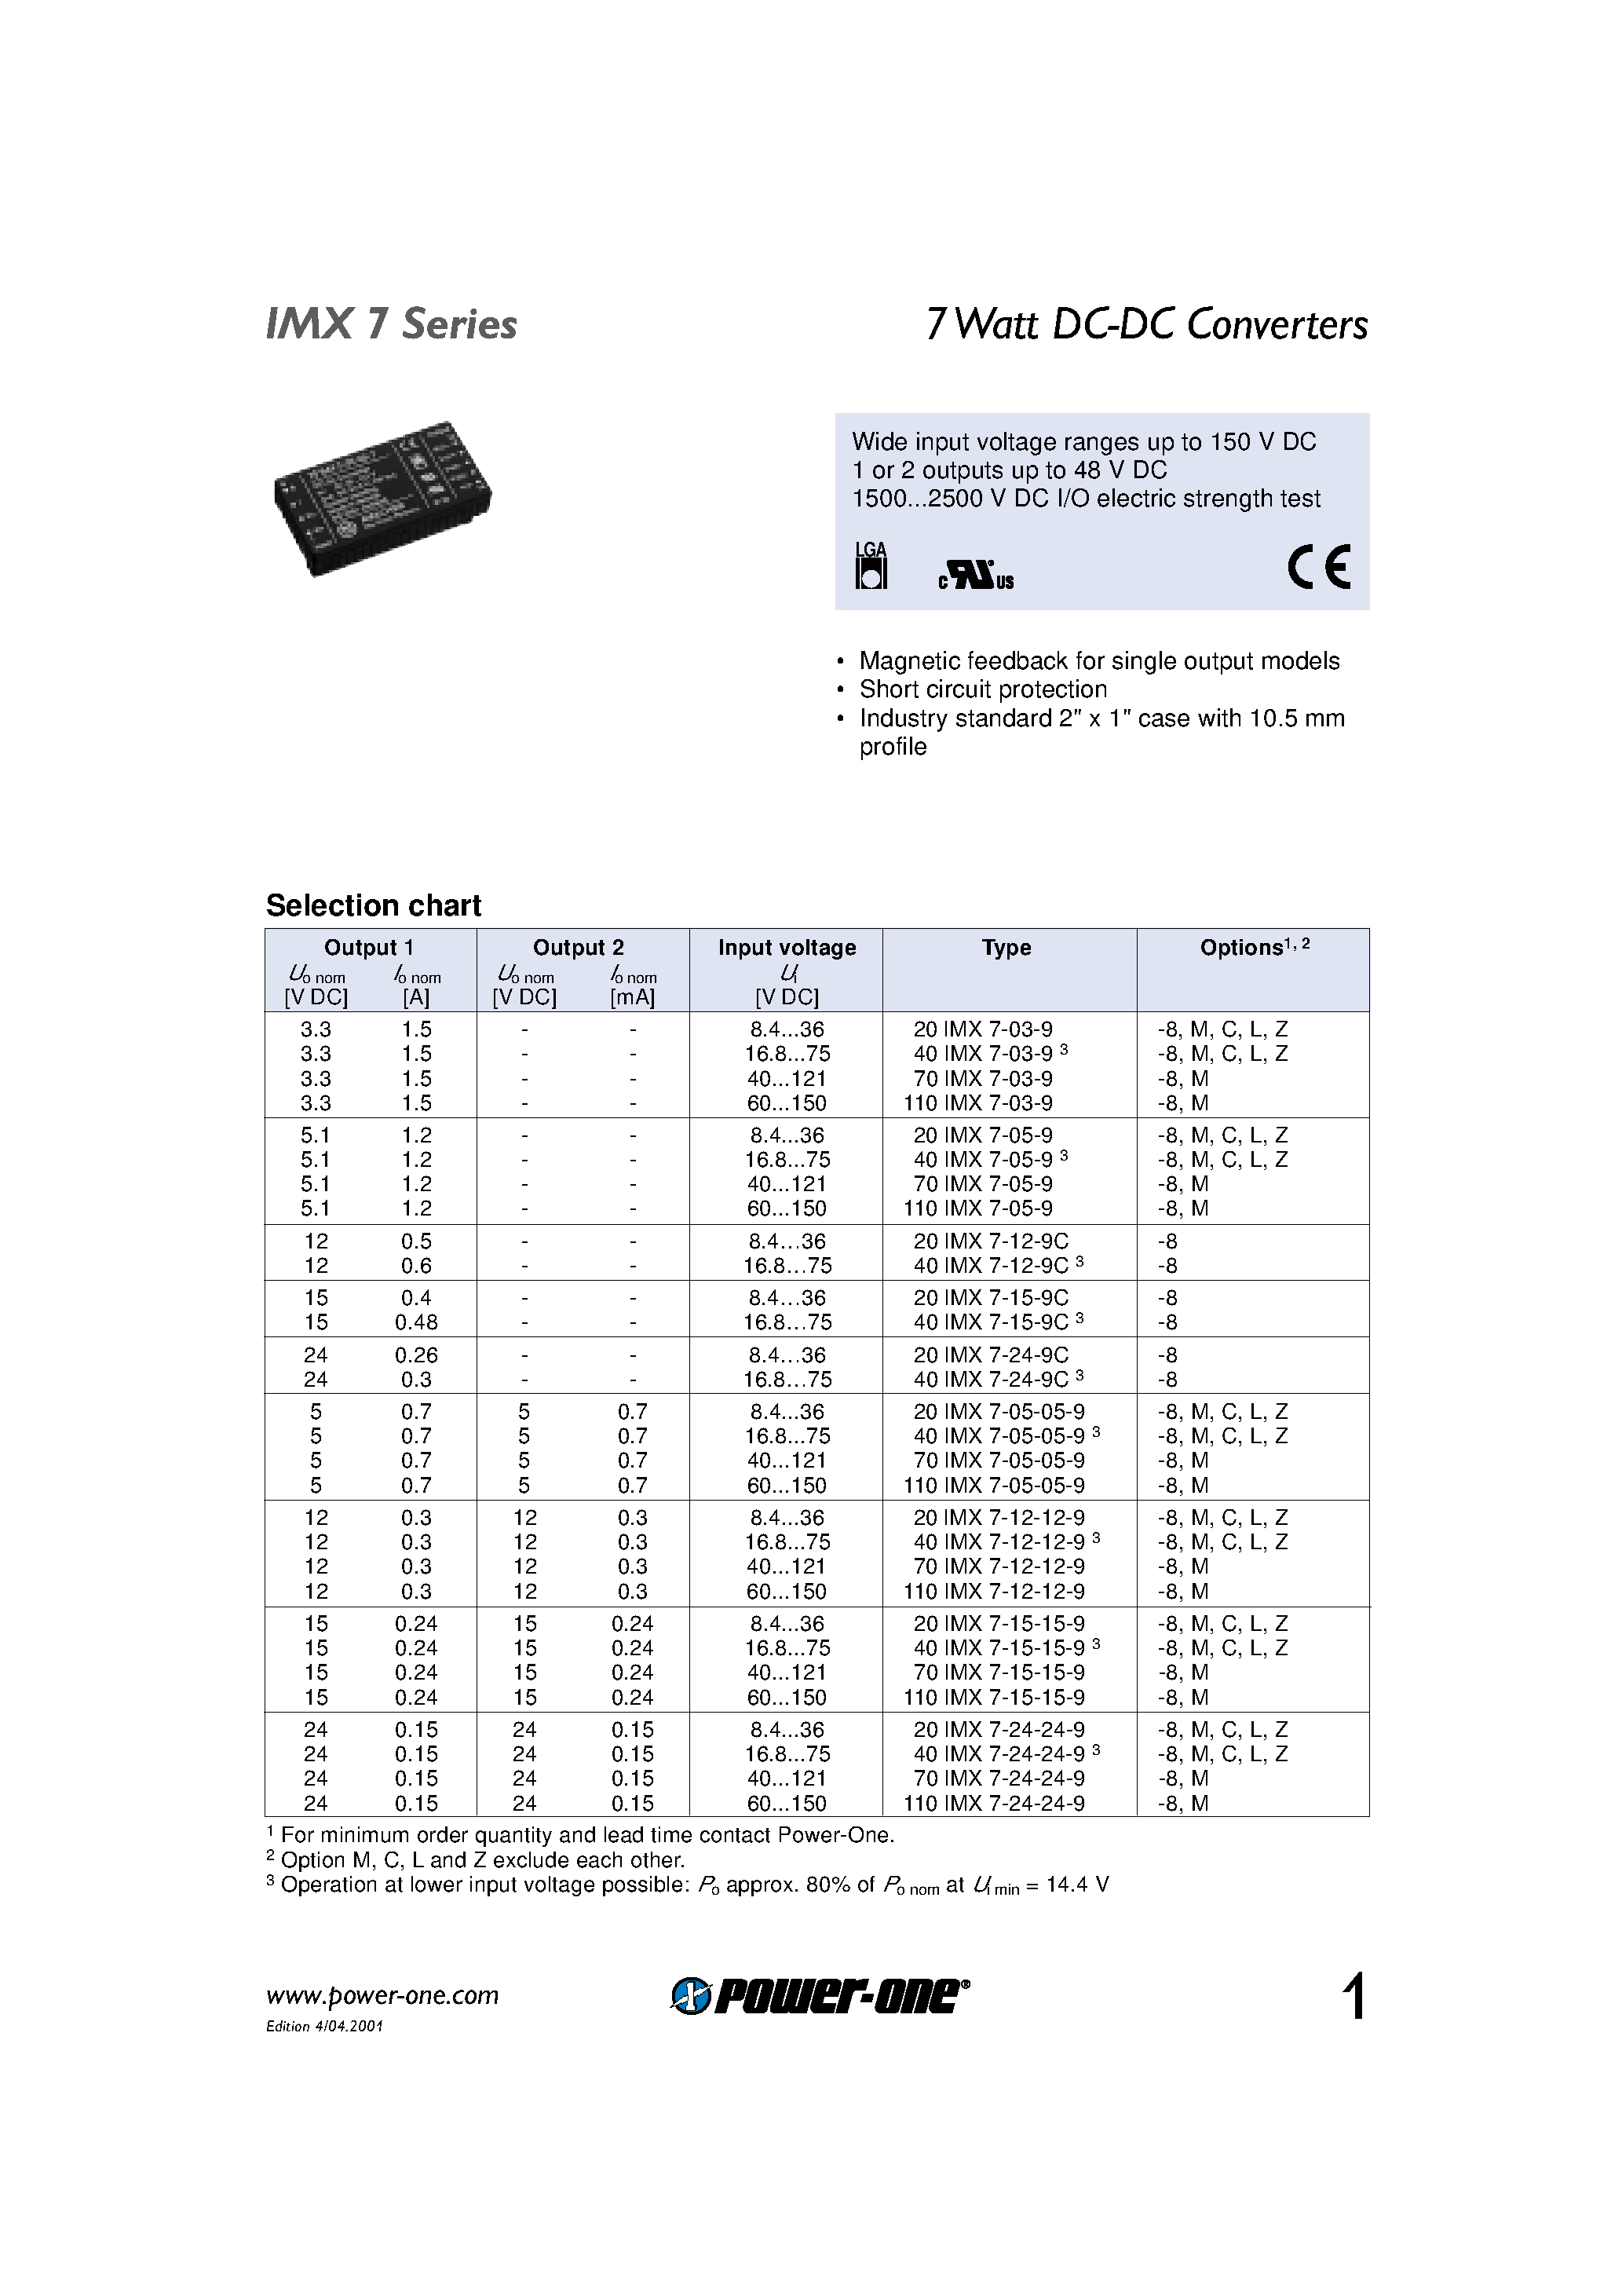 Datasheet 70IMX7-12-12-9 - 7 Watt DC-DC Converters page 1